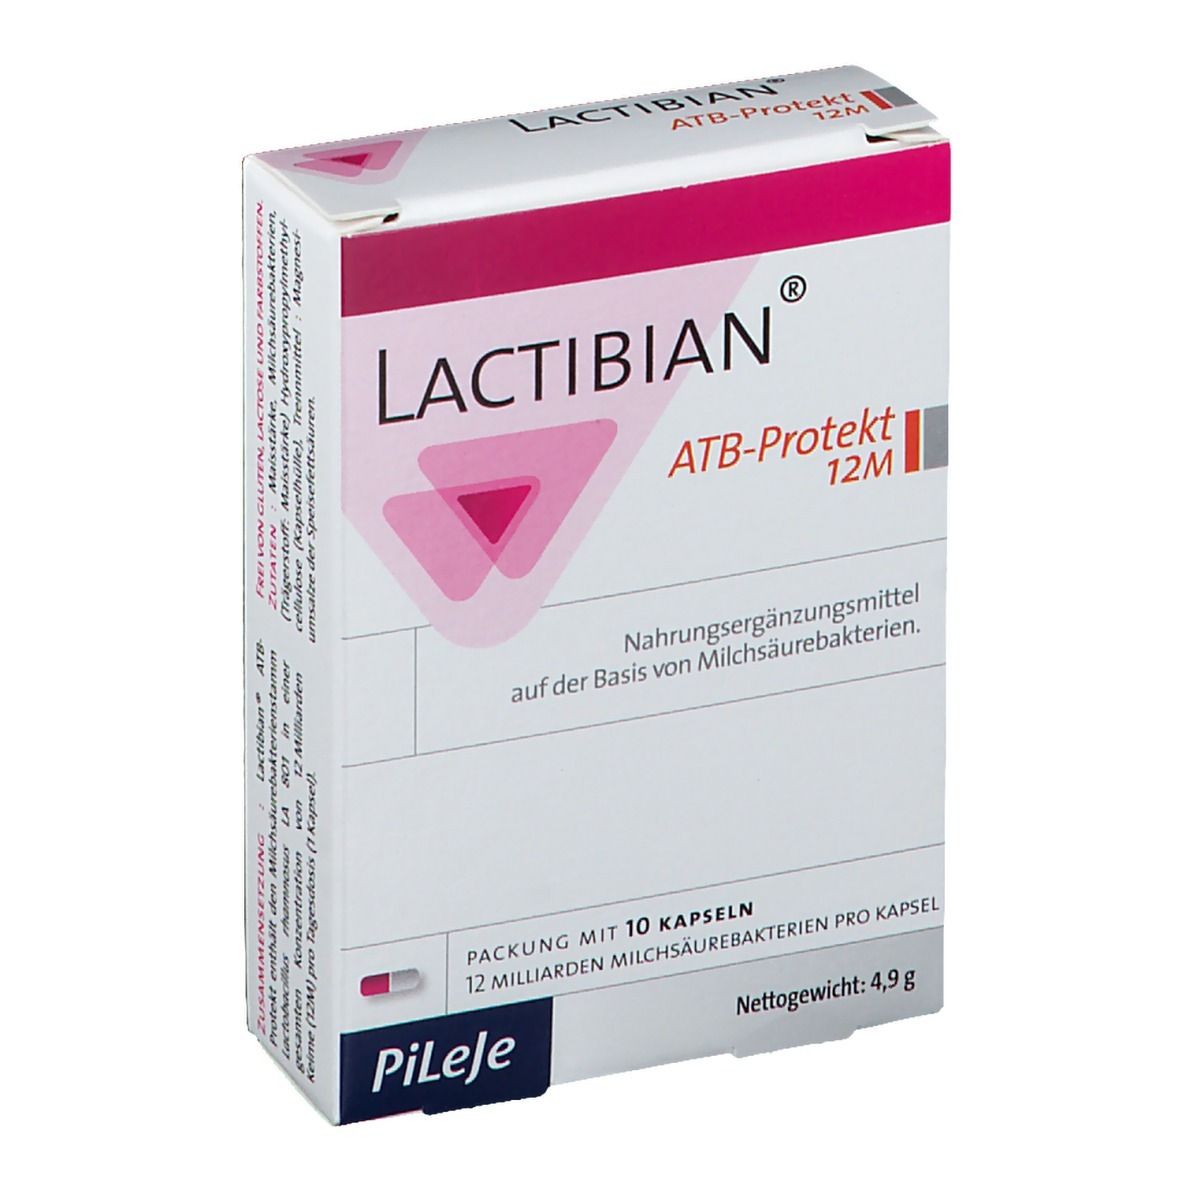 Lactibian® ATB-Protekt 12M